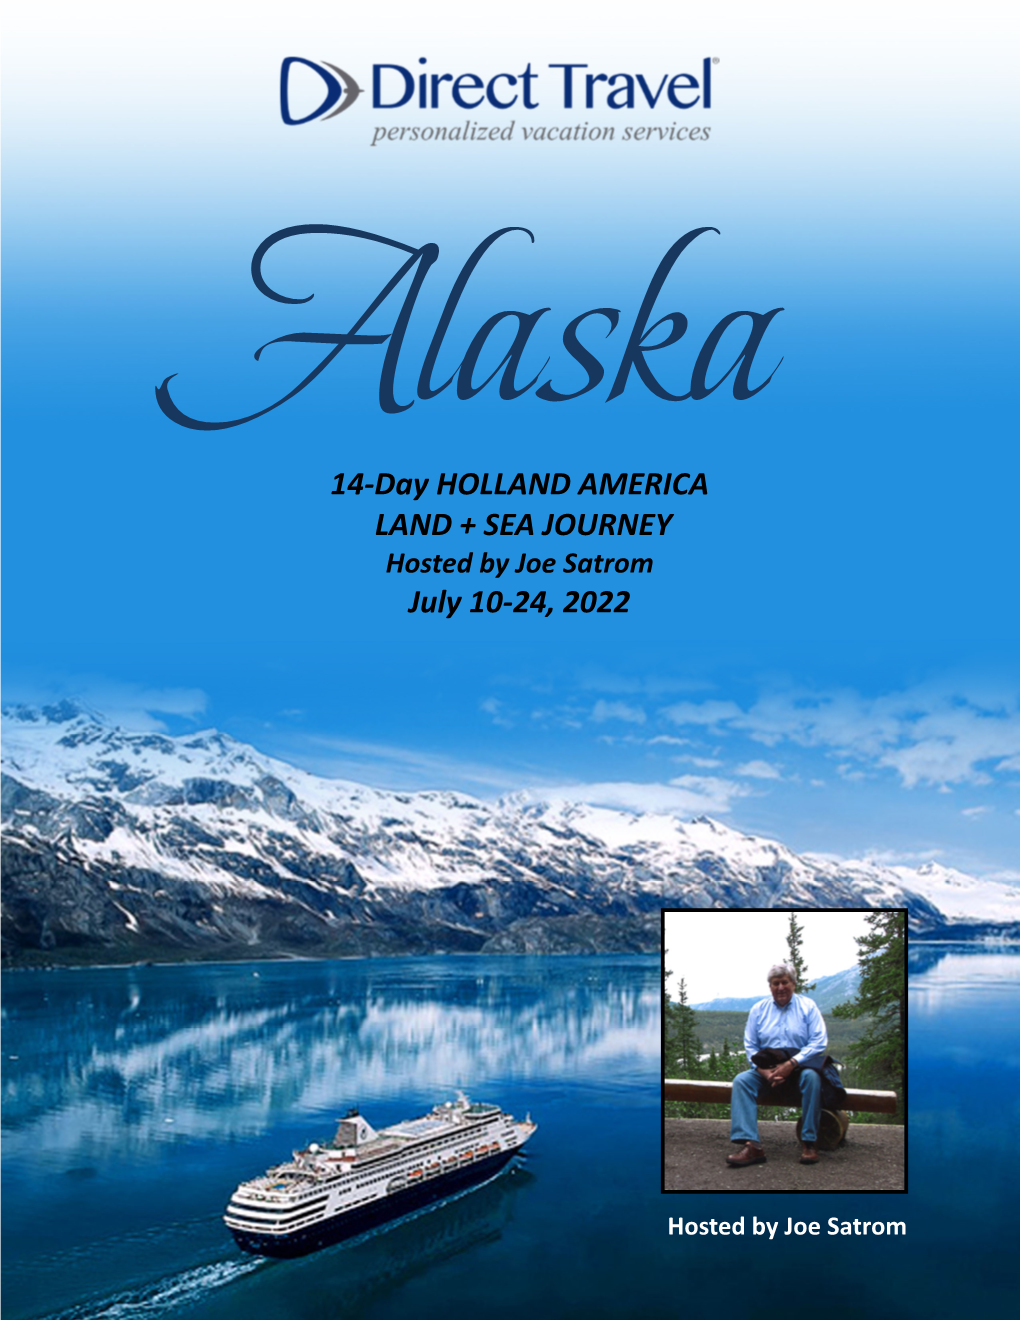 14-Day HOLLAND AMERICA LAND + SEA JOURNEY July 10-24, 2022